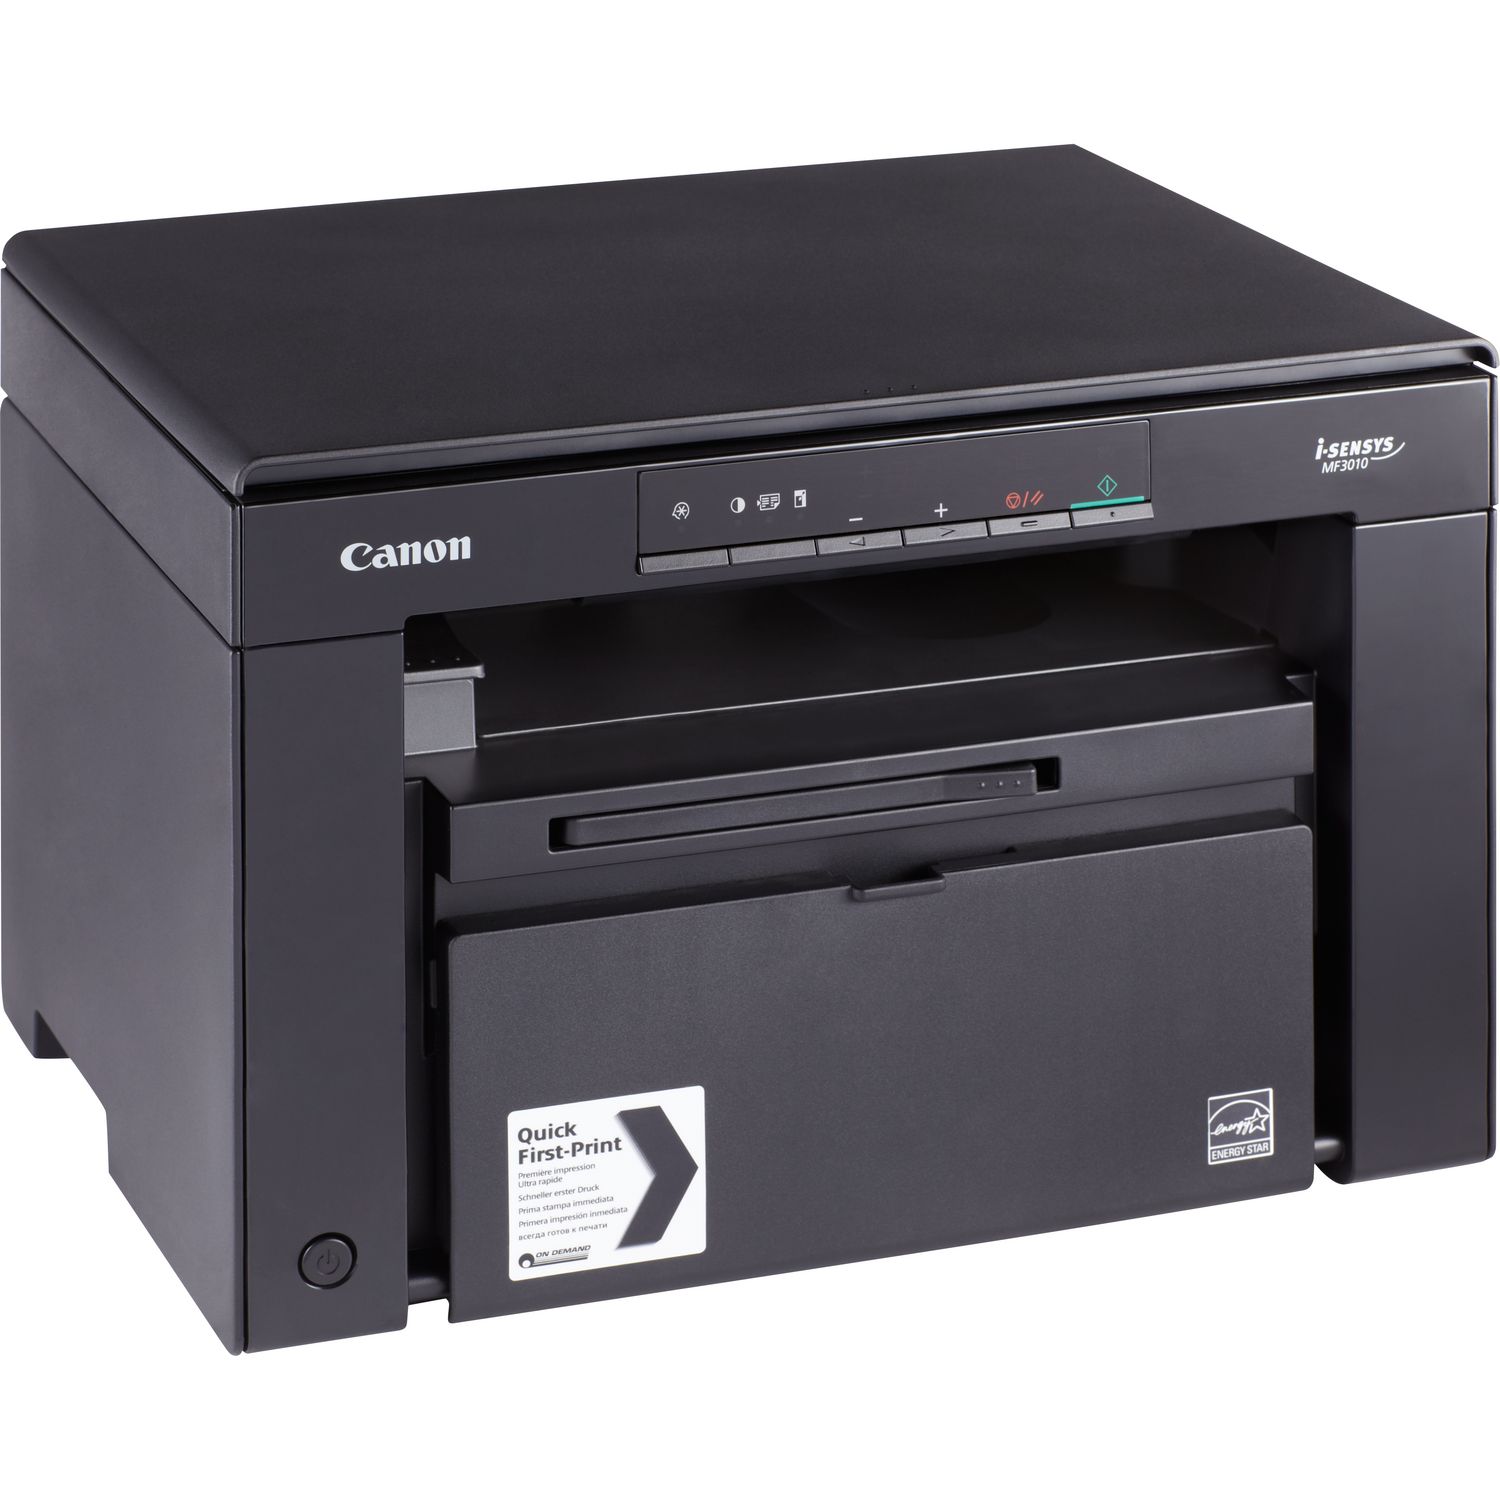 Canon i-SENSYS MF3010 Printer Copier Laser Printer Scanner ...